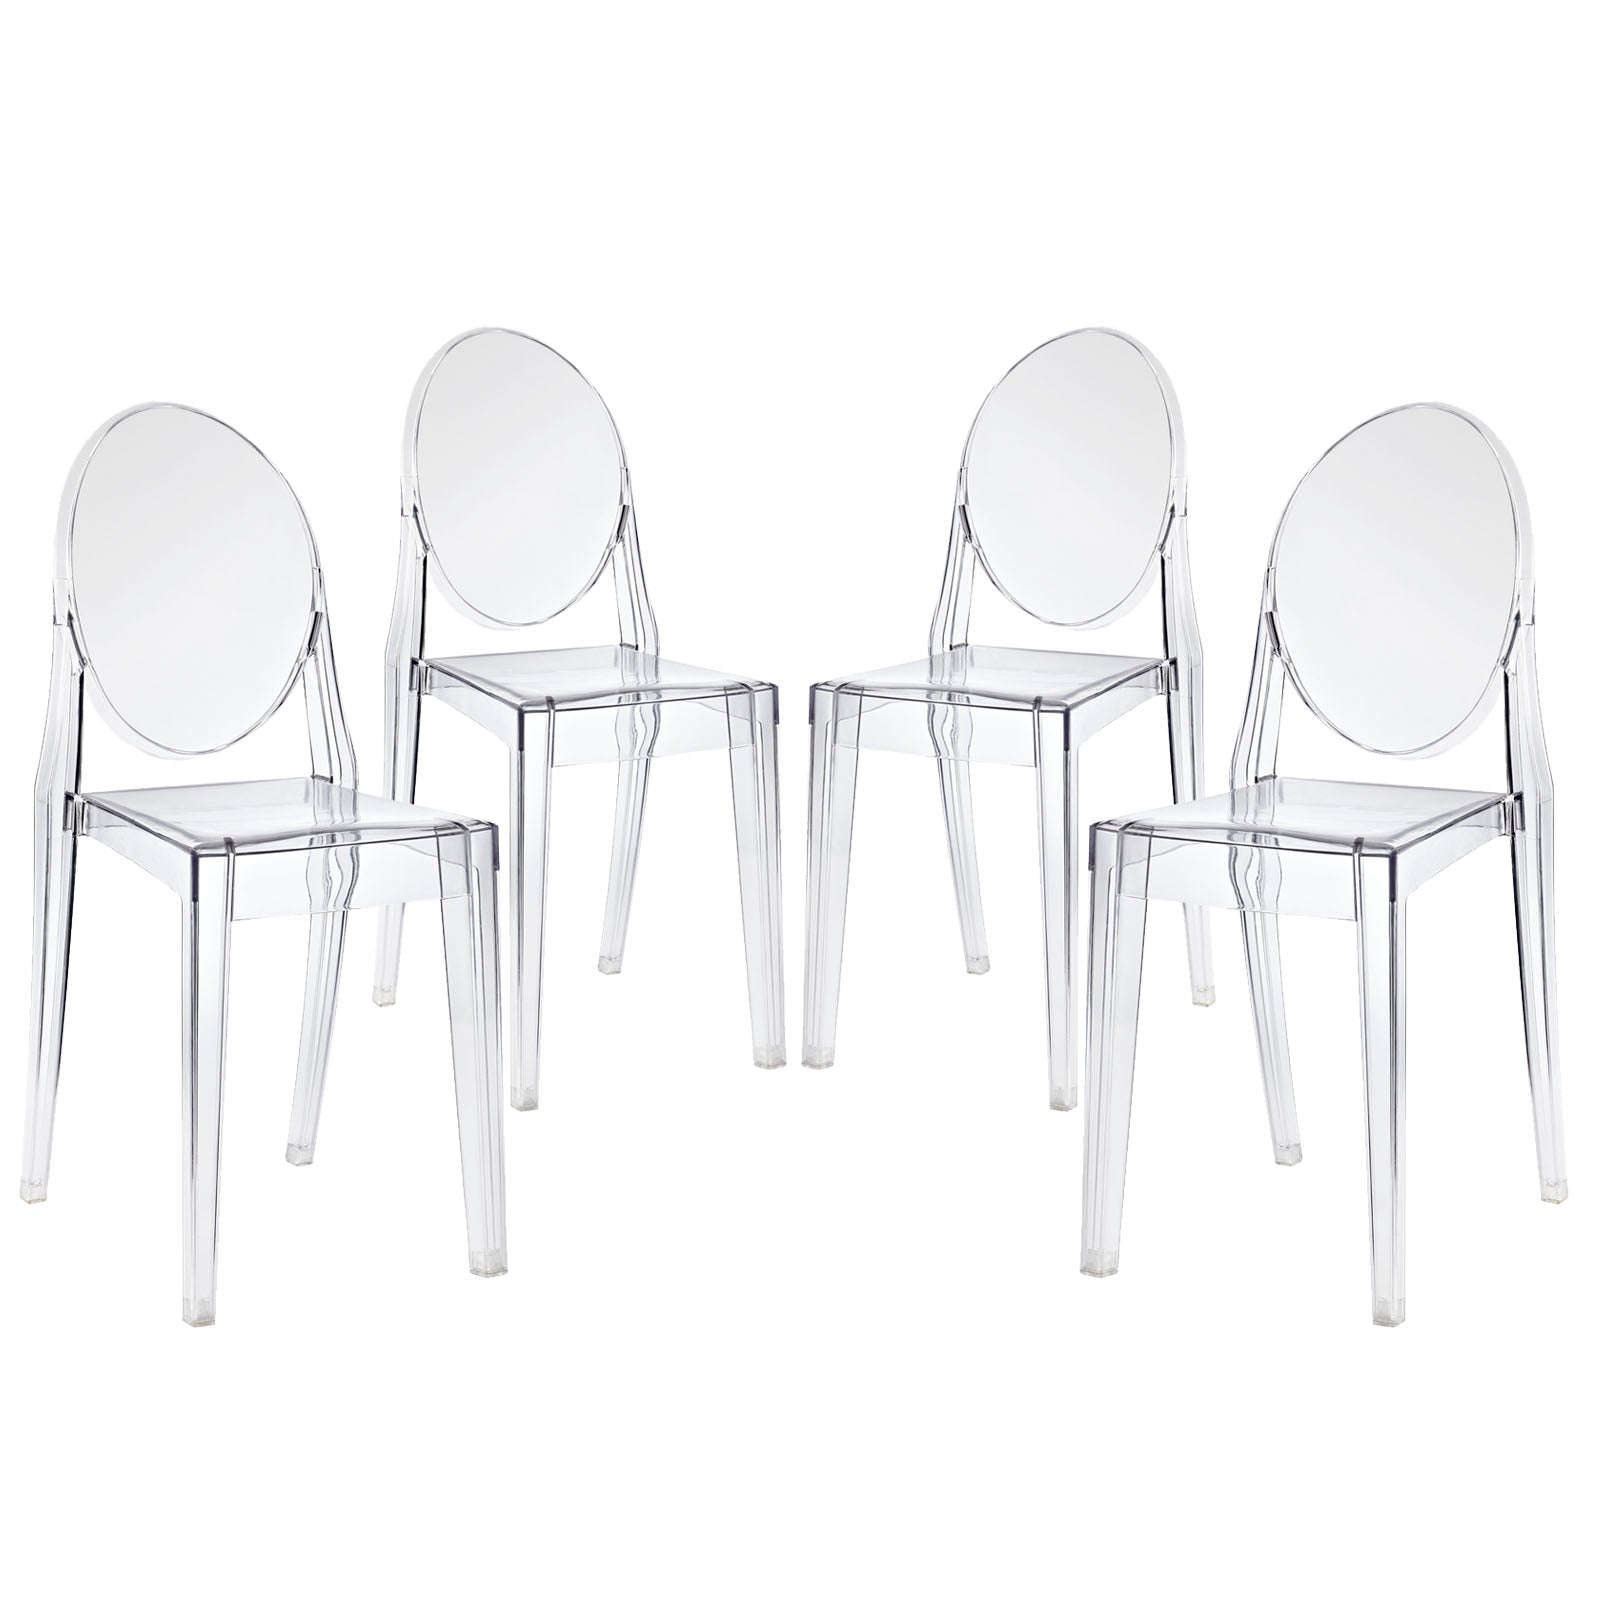 Casper Dining Chairs Set of 4 - East Shore Modern Home Furnishings